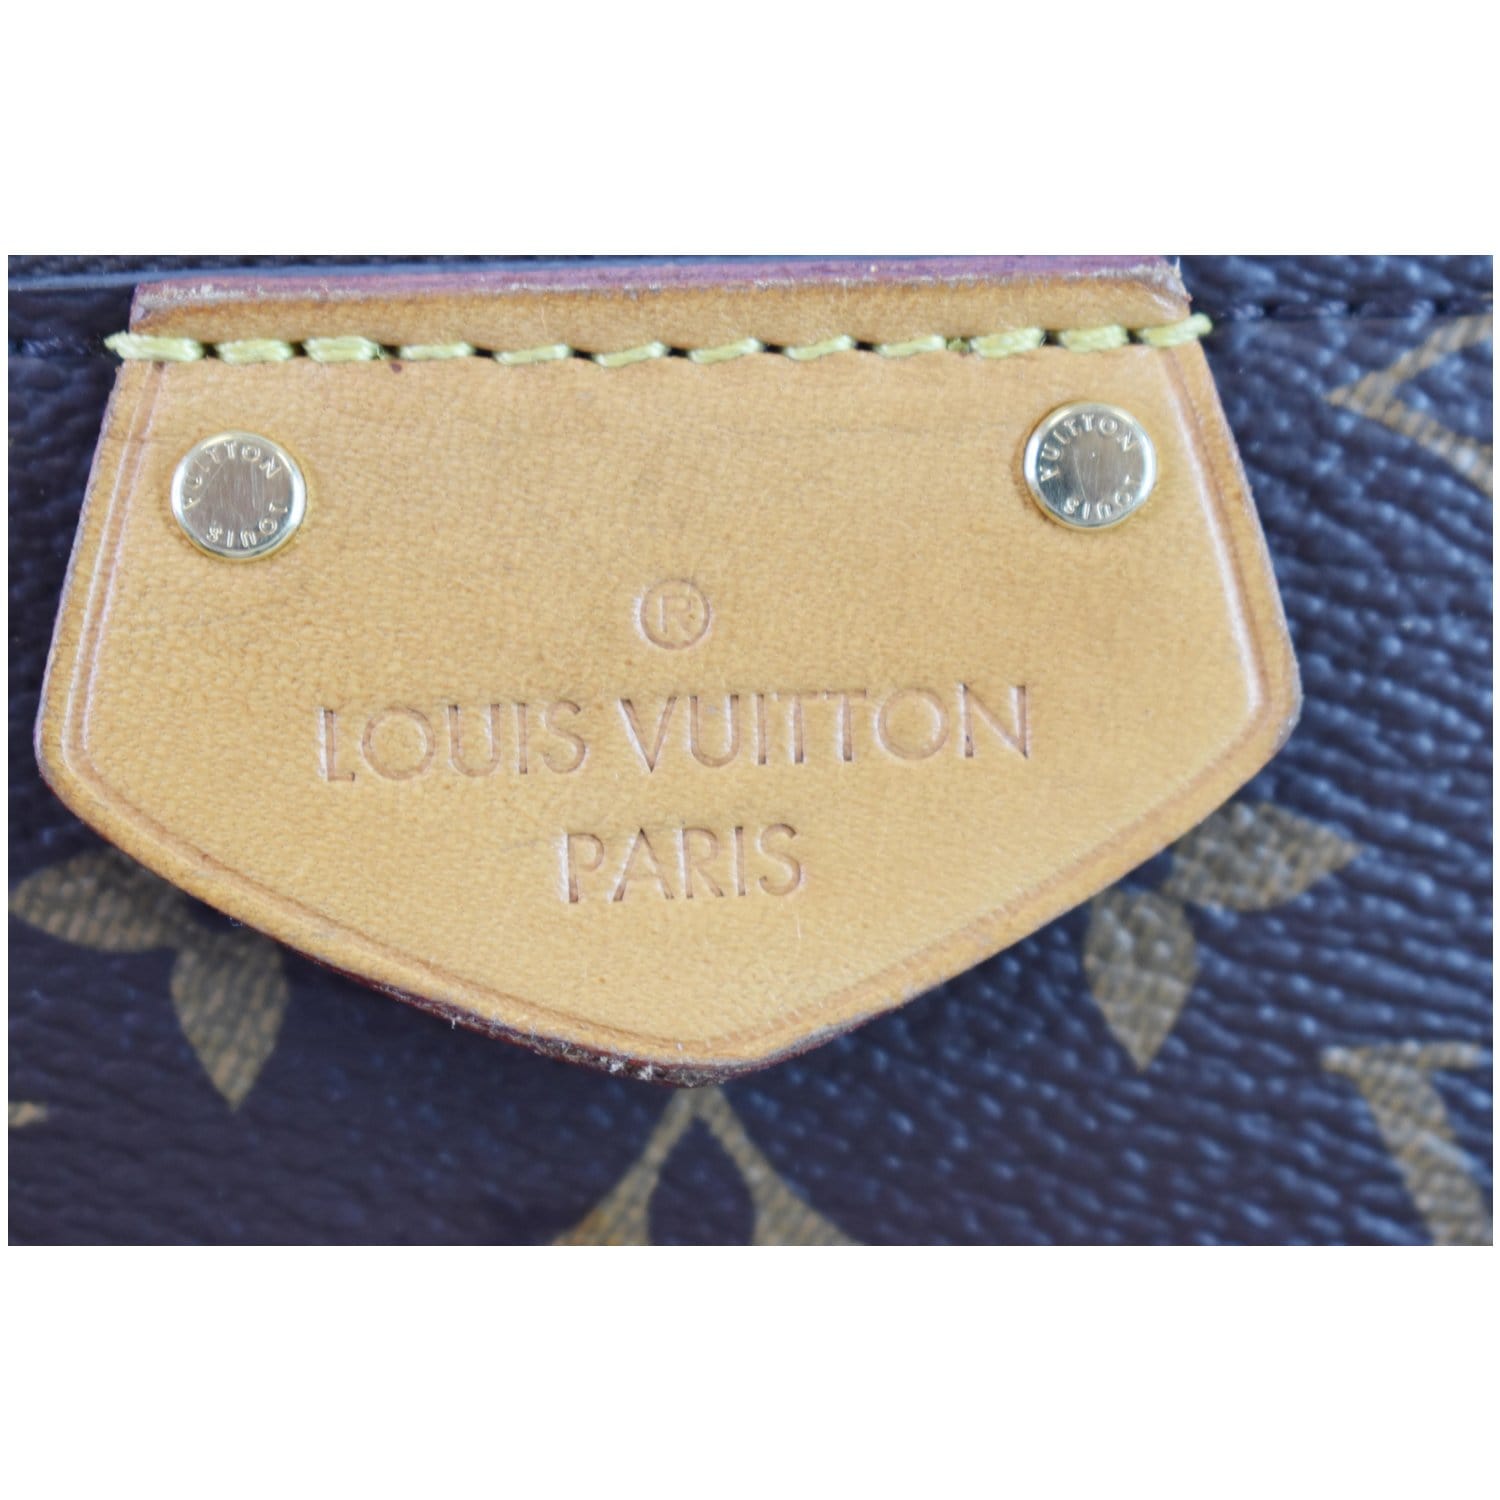 Turenne medium size handbag by Louis Vuitton <3 #losangeles #handbag #bag # louisvuitton